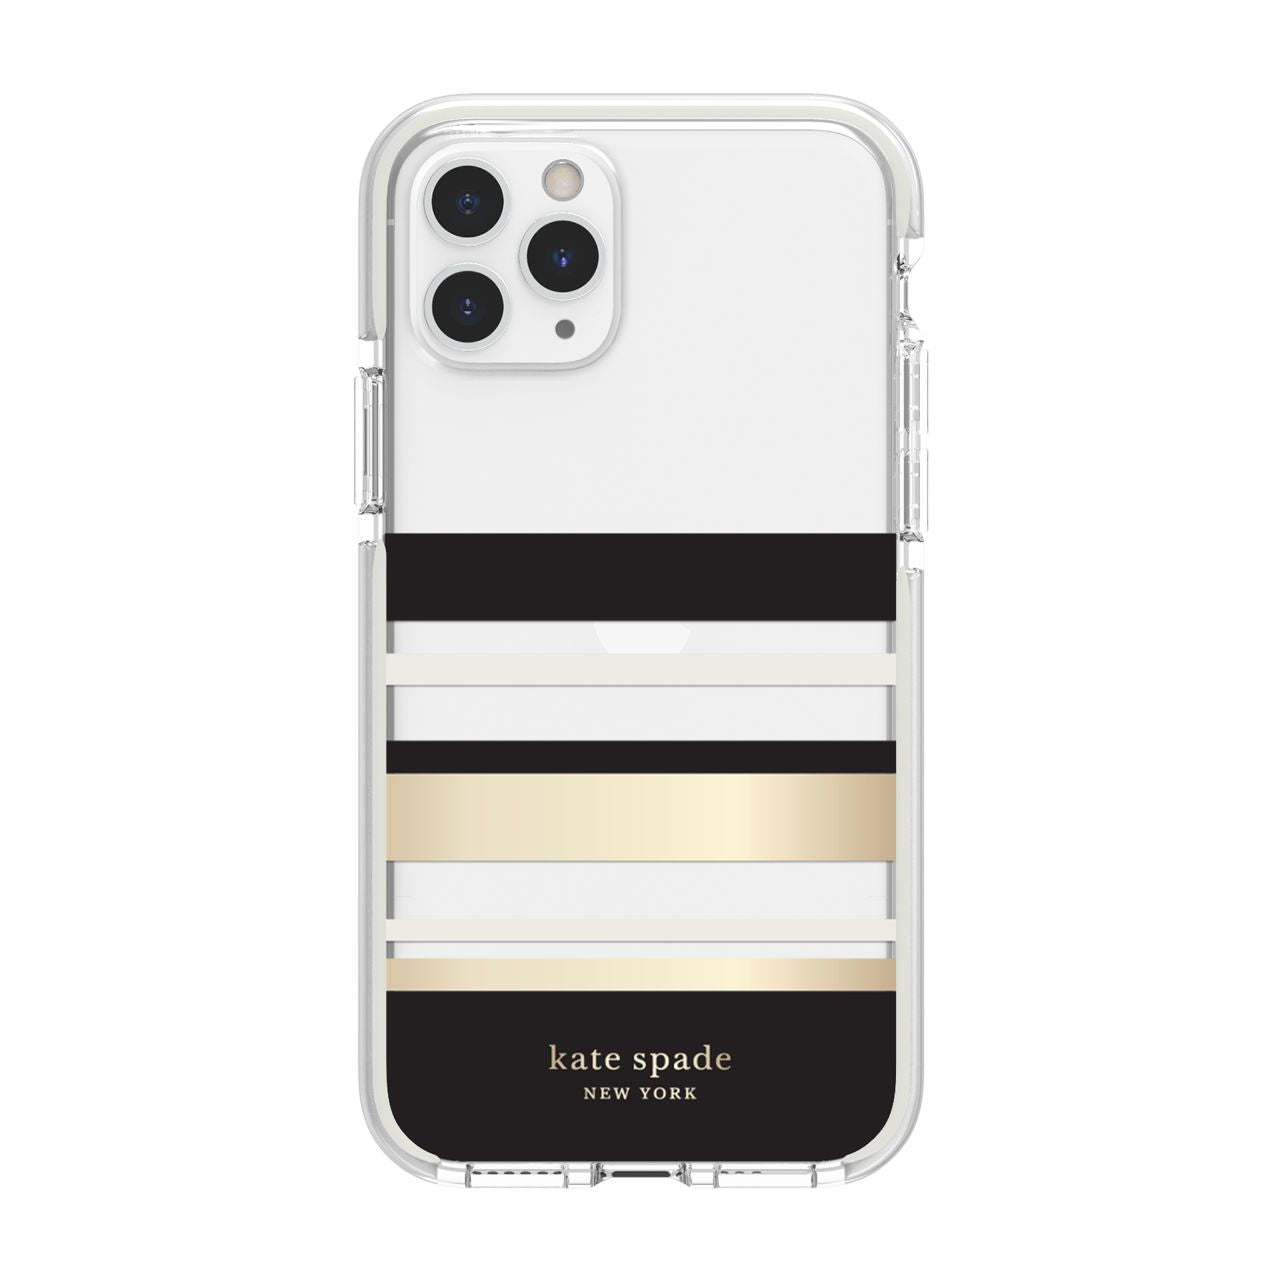 kate spade Hardshell Case for iPhone 11 Pro, Park Stripe Gold Foil/Black/Cream/Cream Bumper/Clear